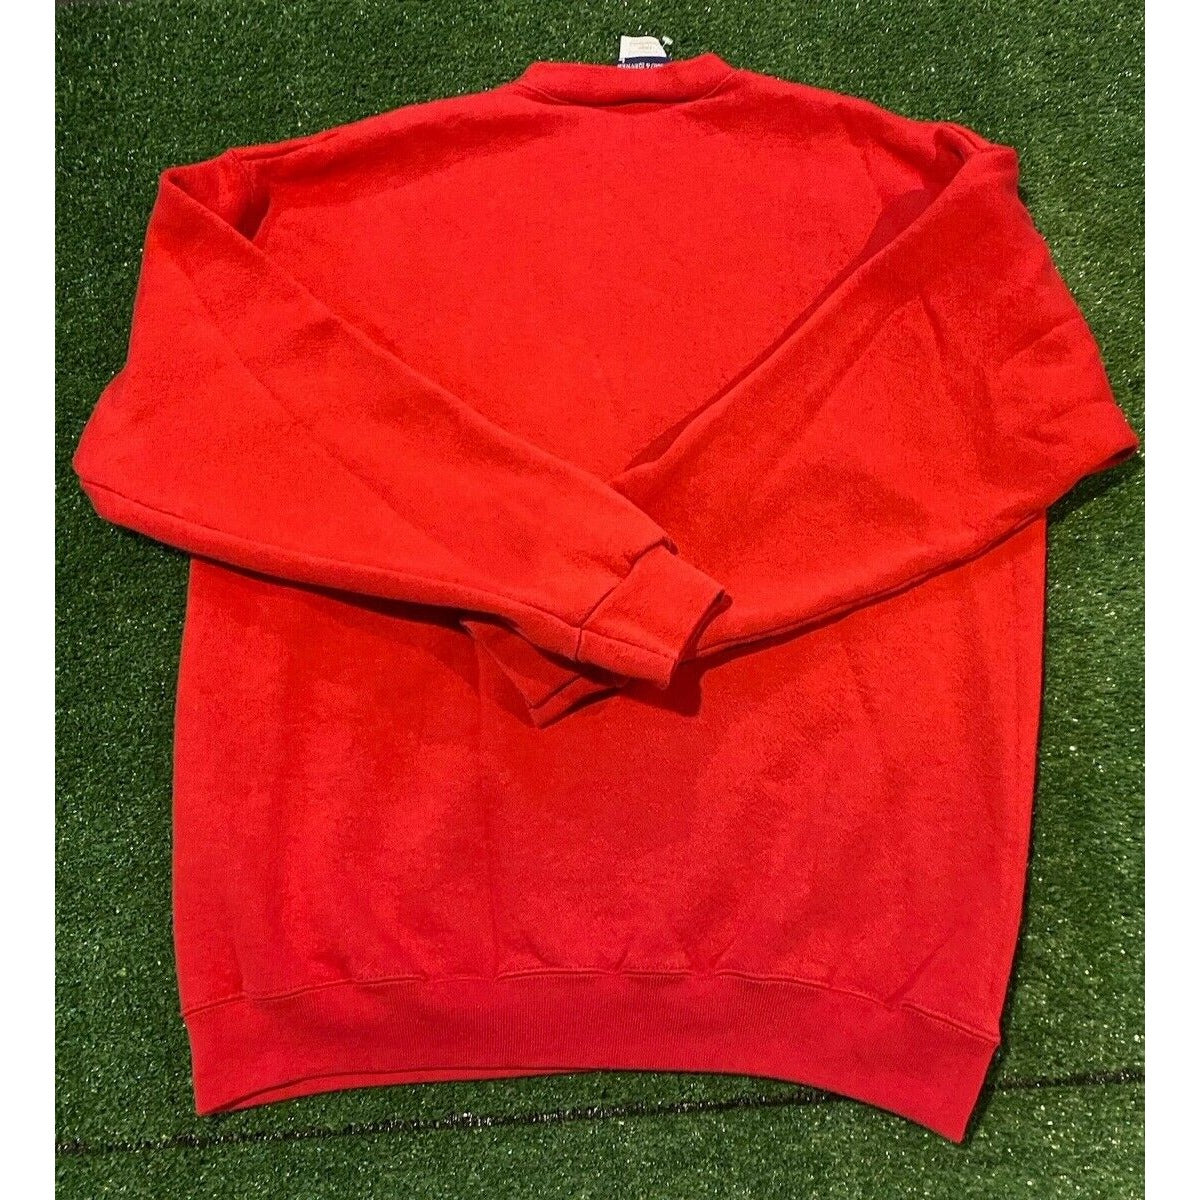 Vintage Ohio State sweatshirt large red unisex adult mens football crew neck 90s